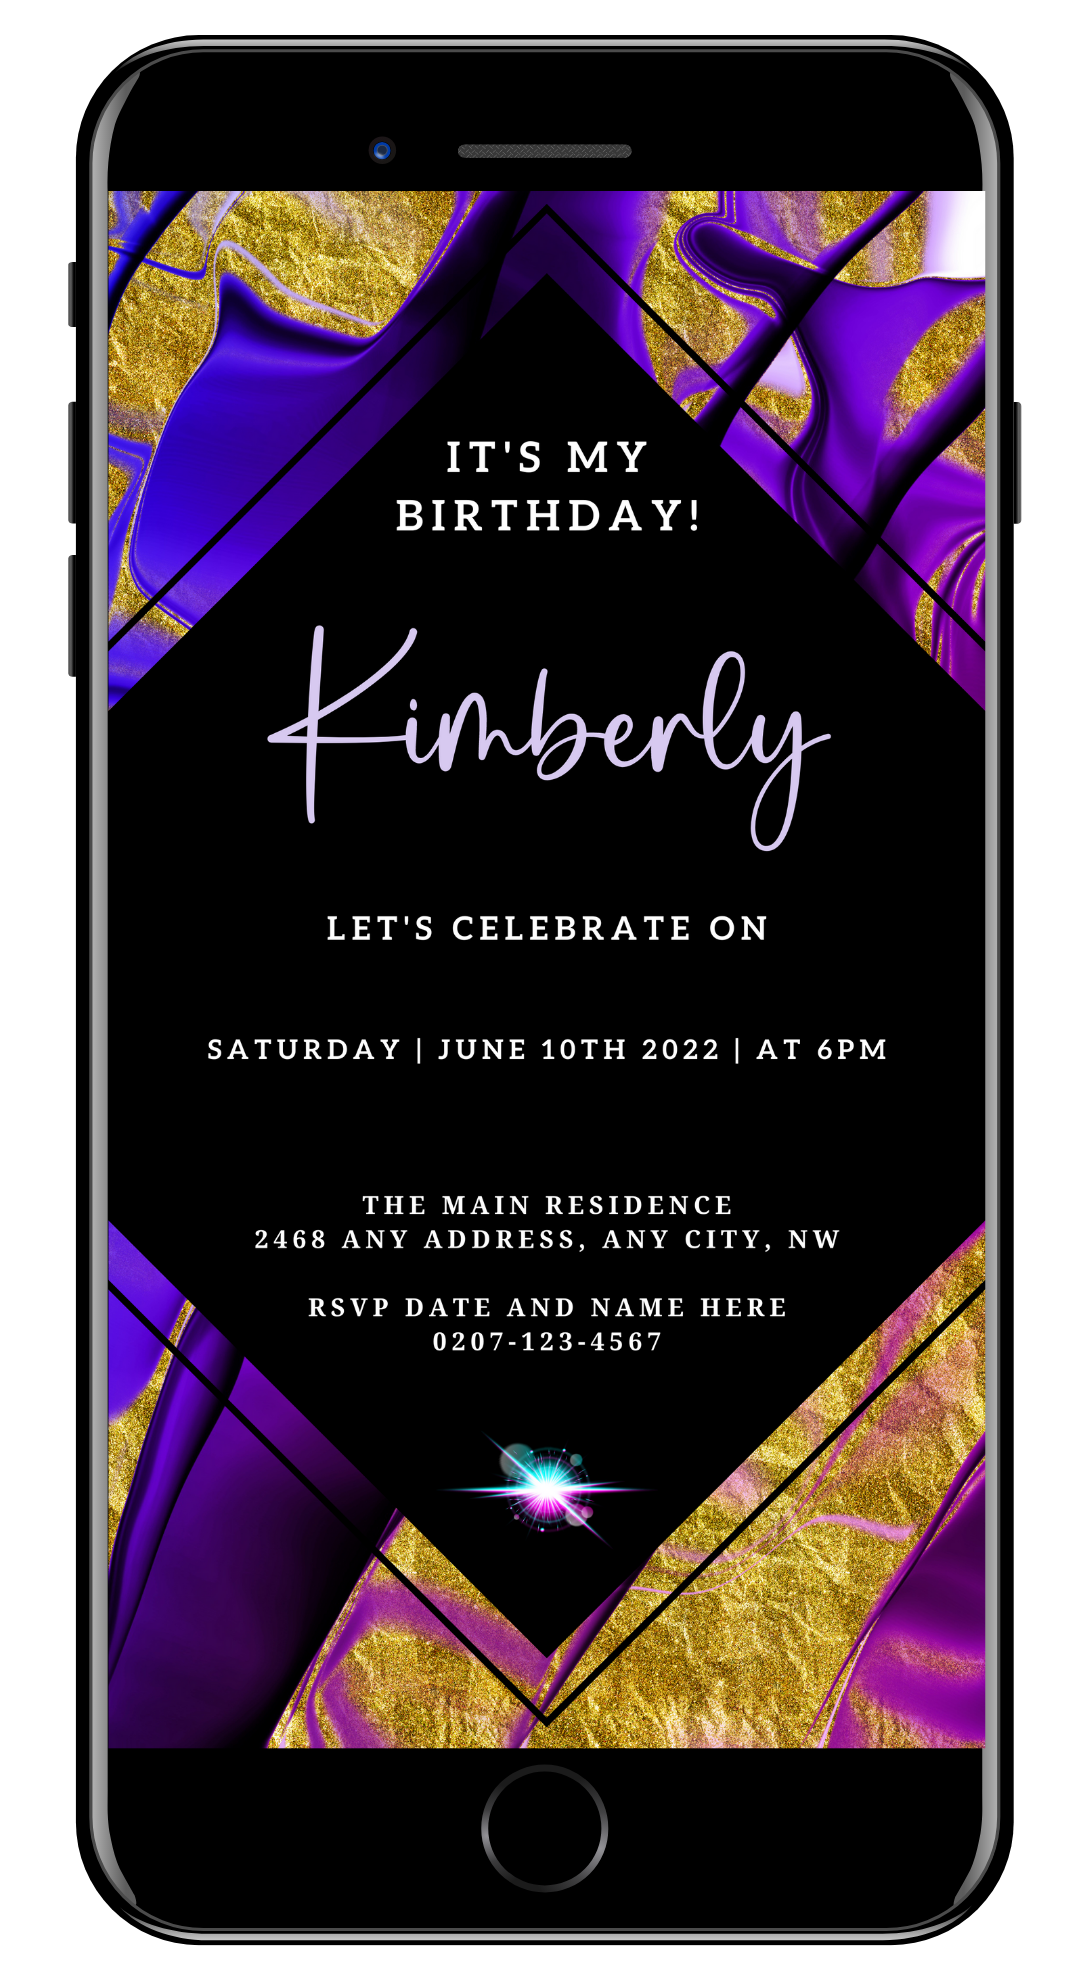 Editable Purple Gold Ankara Birthday Evite. Black and purple digital invitation template for events, customizable via Canva on PC, tablet, or mobile device.